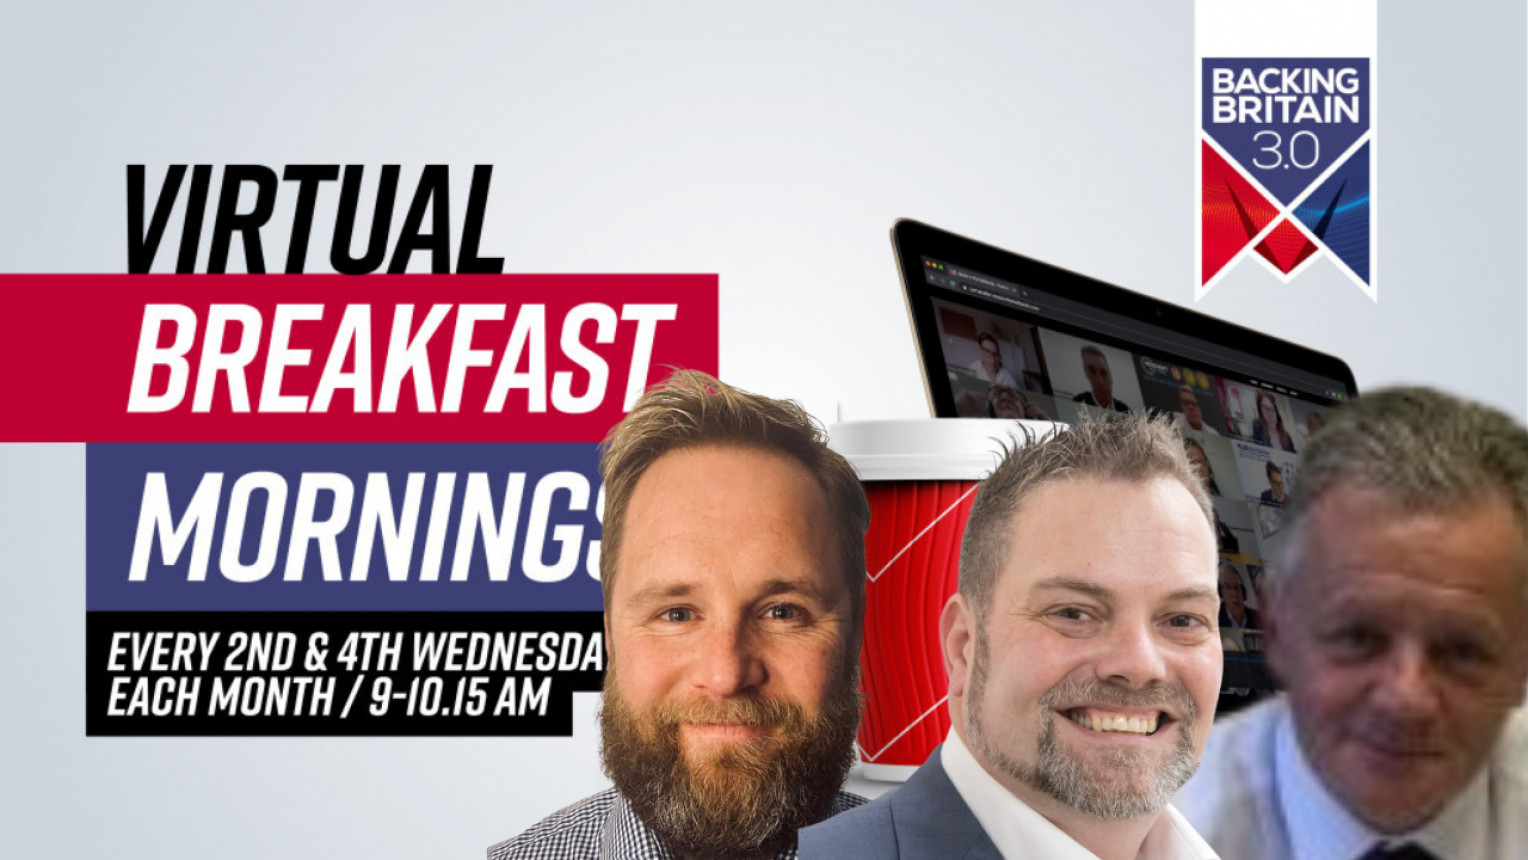 Backing Britain Virtual Breakfast Morning with SGS, Pressmark Pressings and Balmoral Tanks